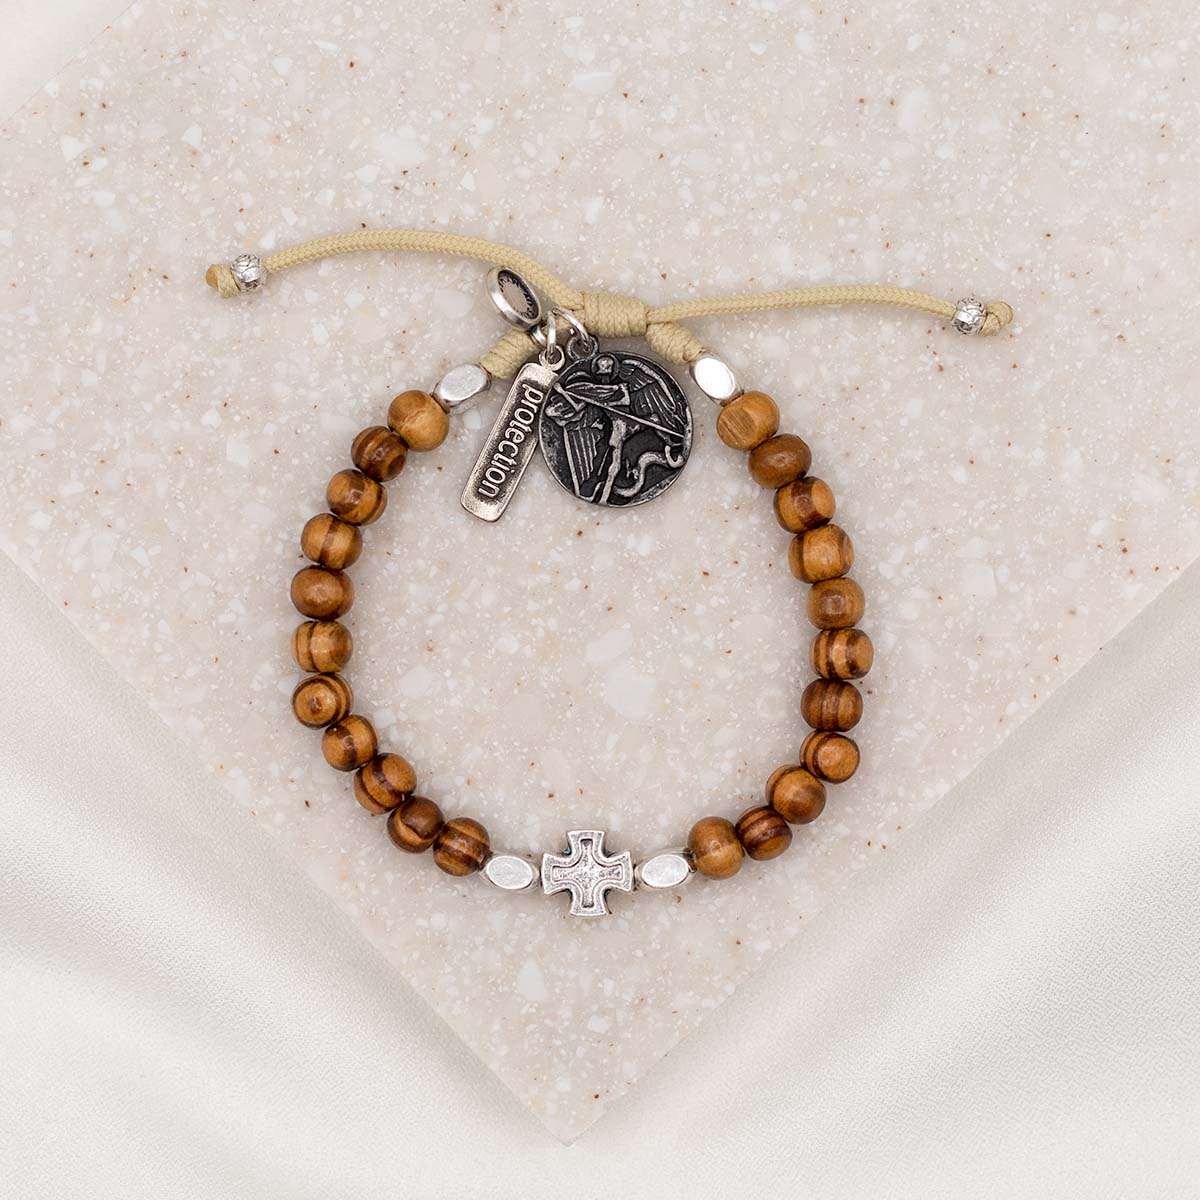 Archangel Saint Michael Spiritual Bracelet With Wood Beads